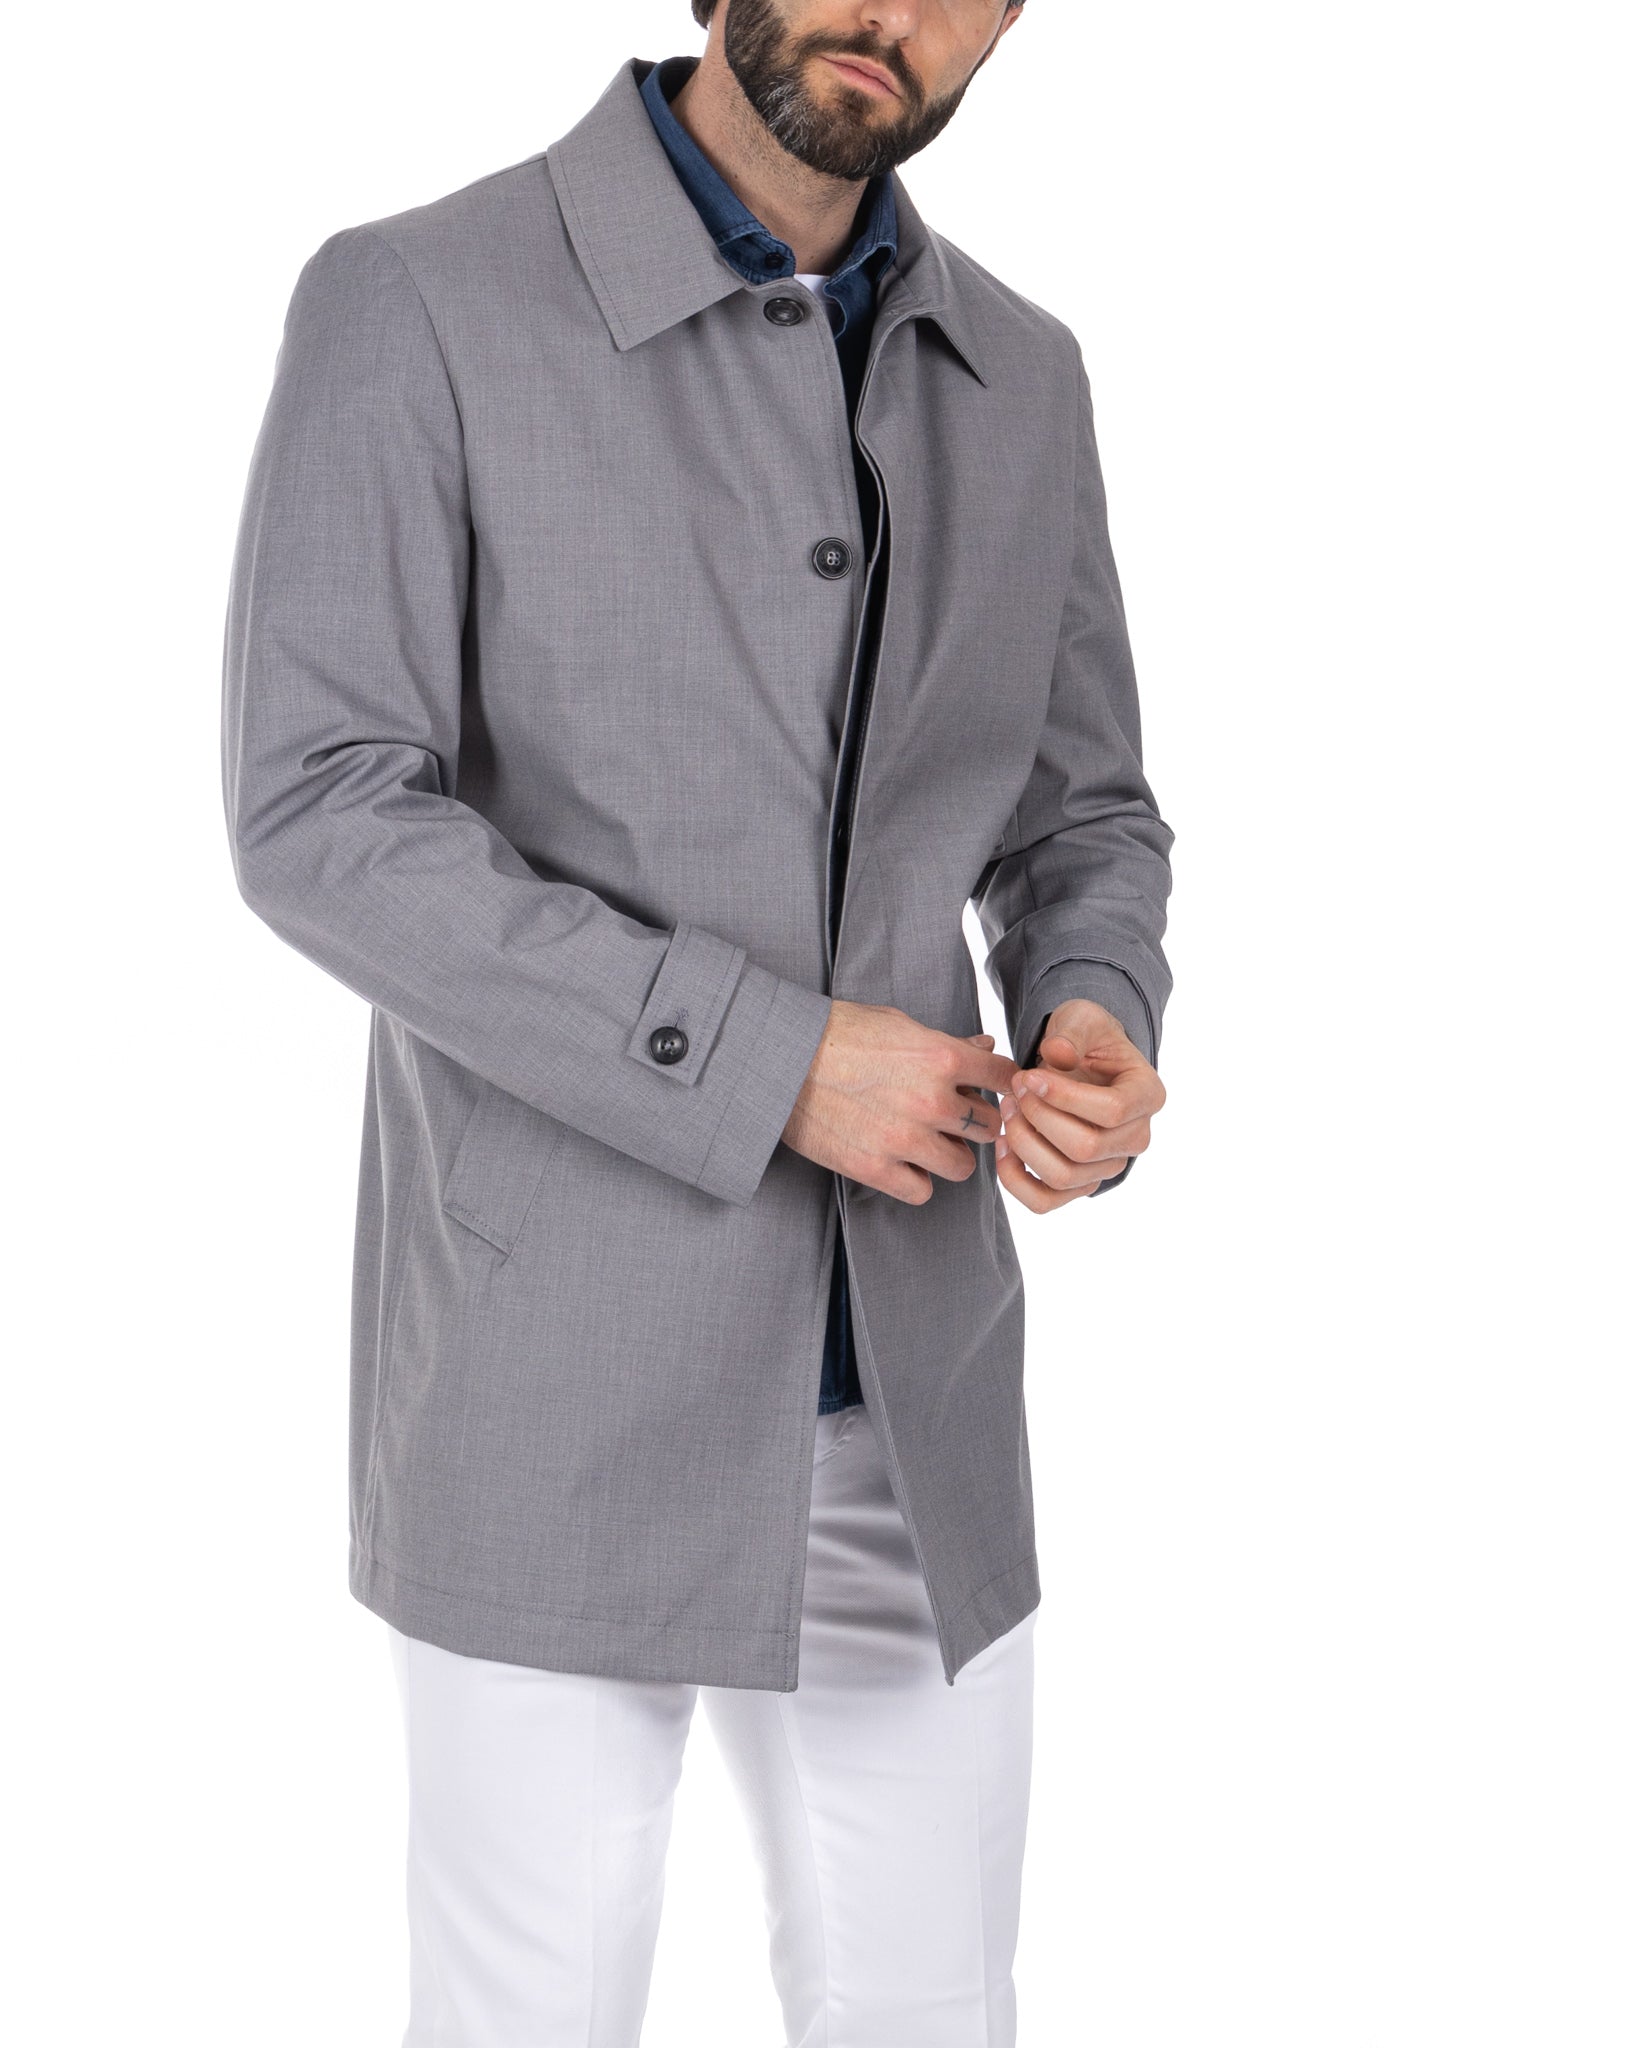 Mantua - gray unlined trench coat